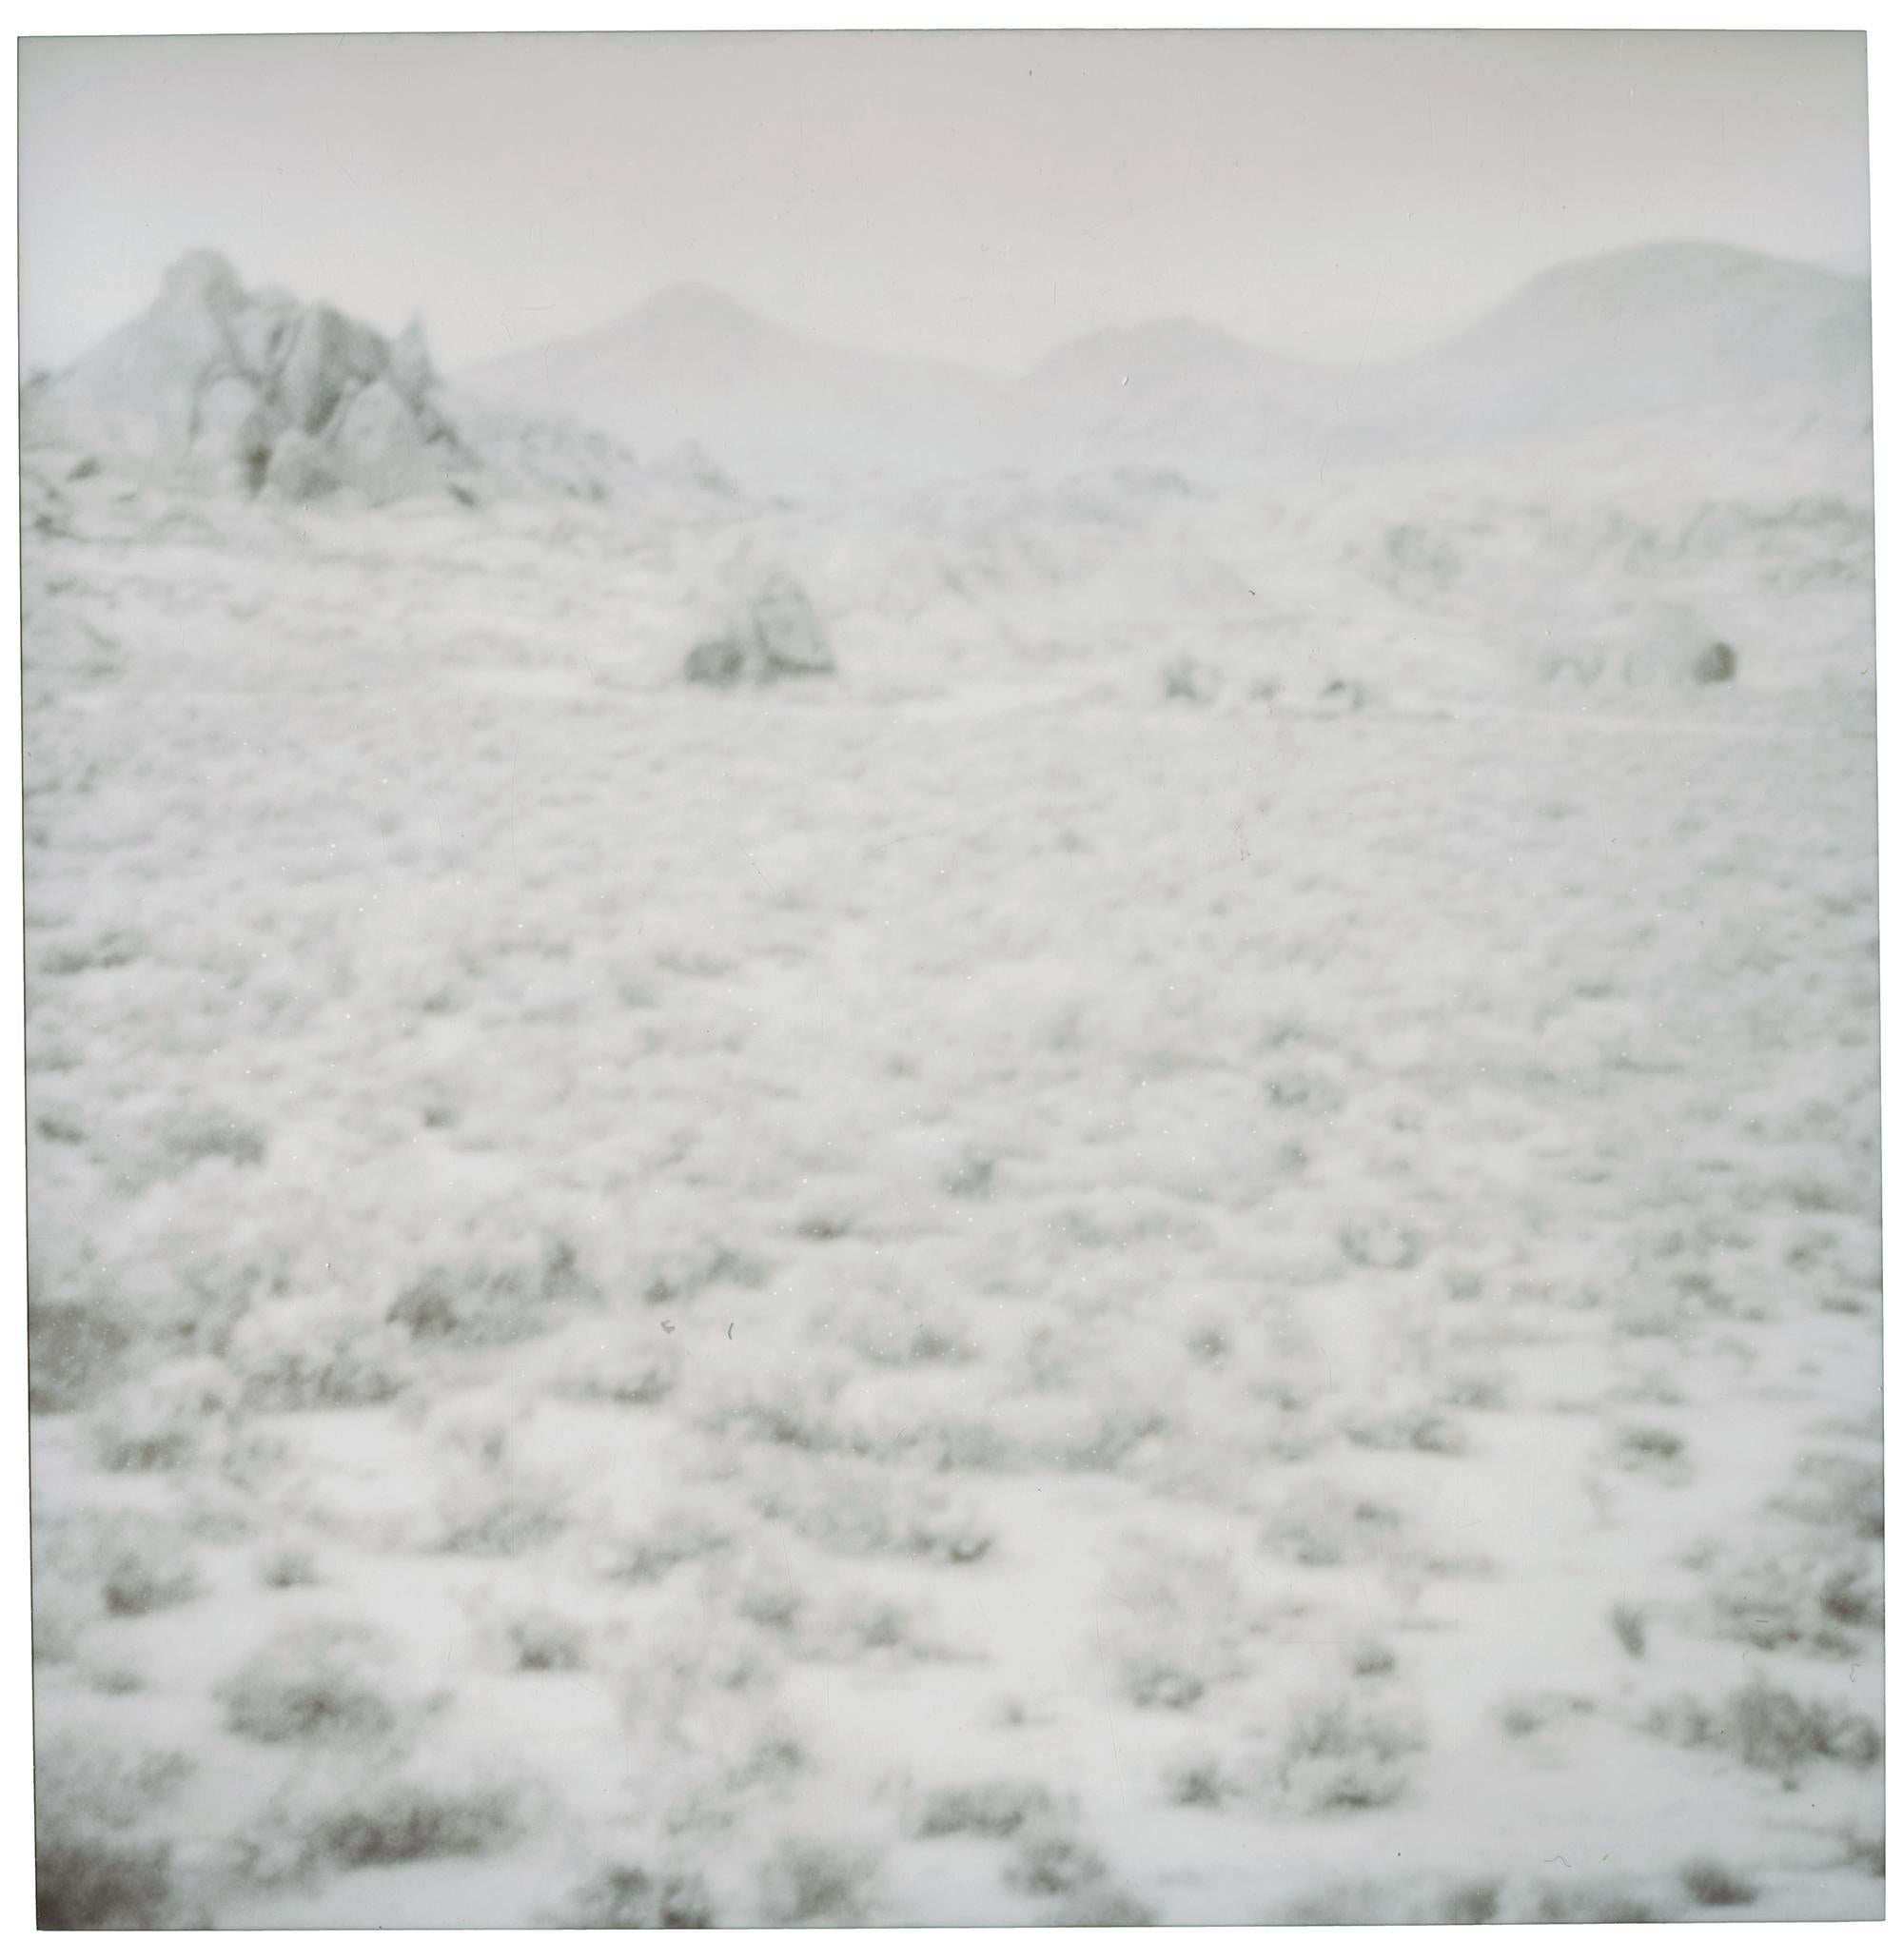 Stefanie Schneider Black and White Photograph - Hidden Valley (Wastelands) - Polaroid, Expired. Contemporary, Color